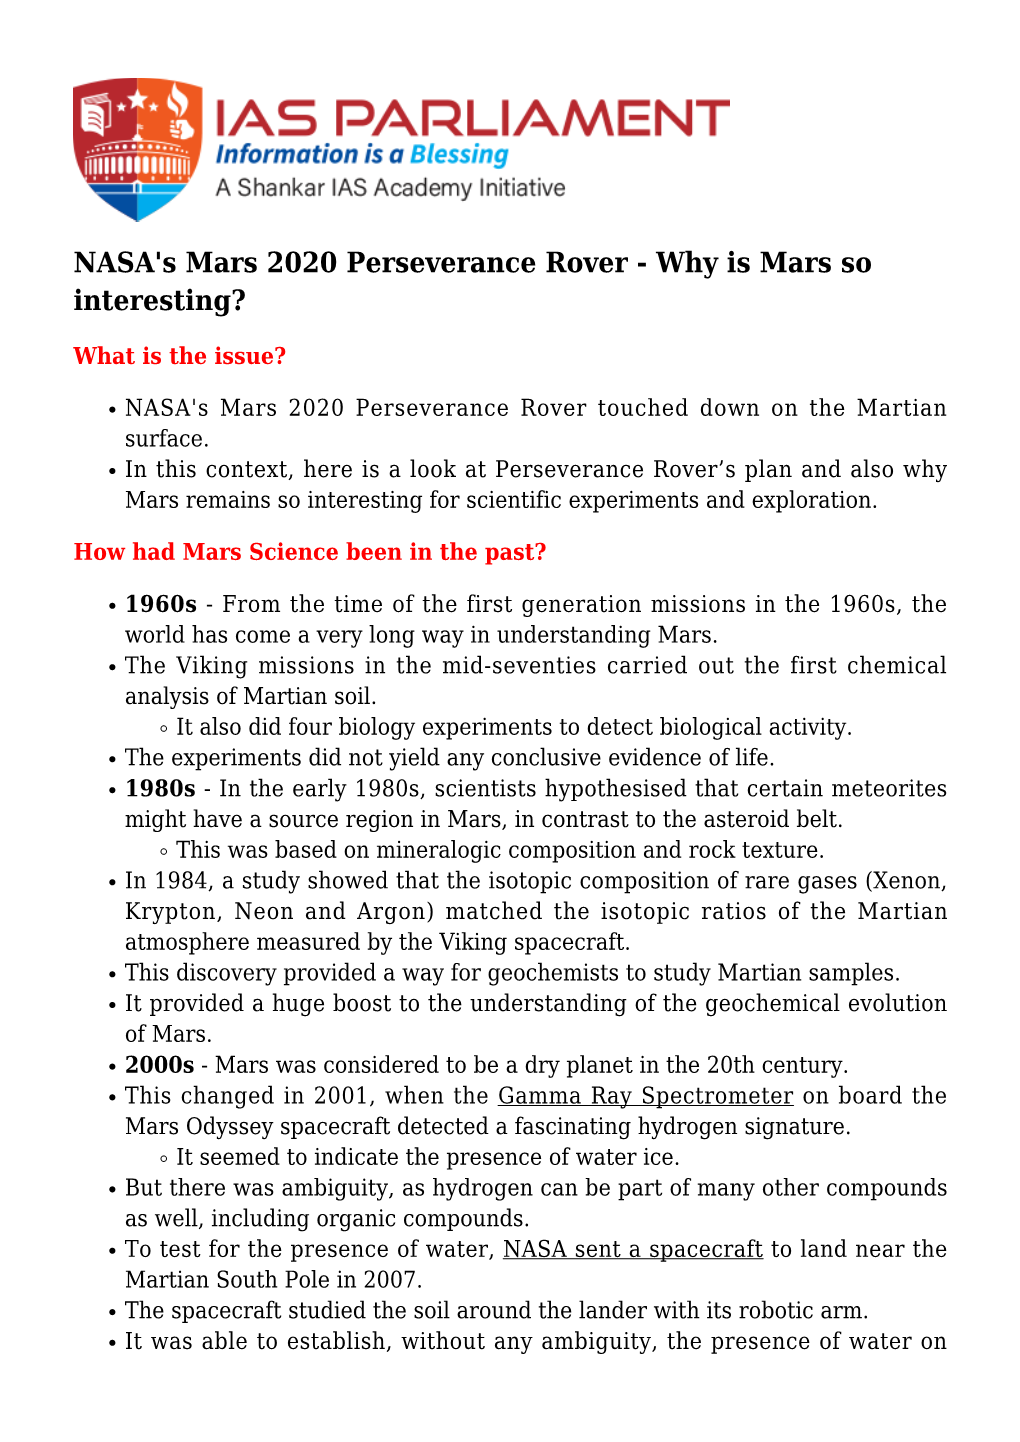 NASA's Mars 2020 Perseverance Rover - Why Is Mars So Interesting?